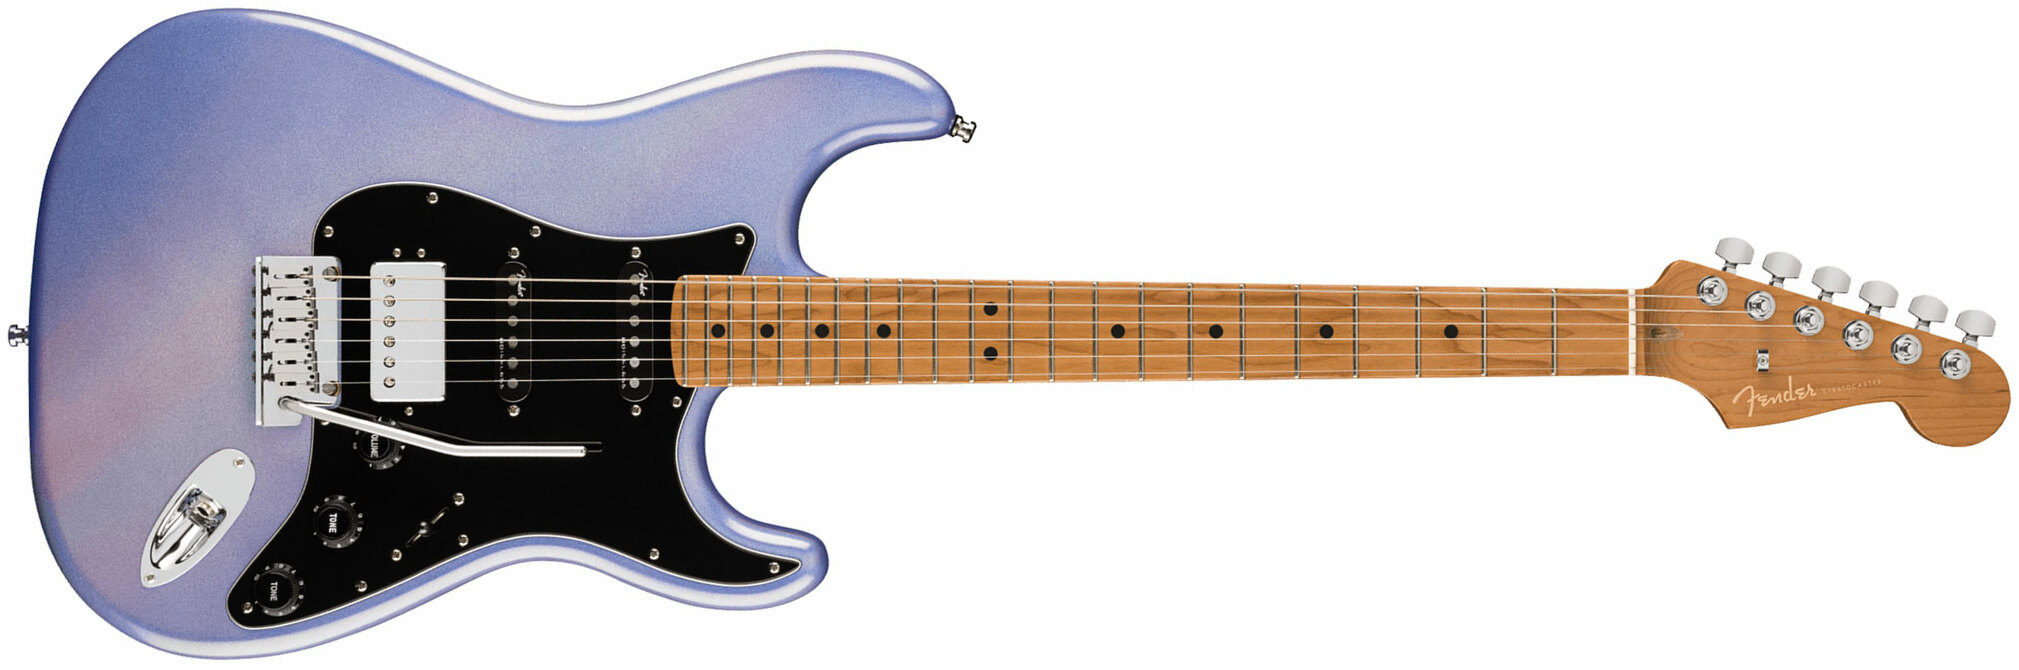 Fender Strat 70th Anniversary American Ultra Ltd Usa Hss Trem Mn - Amethyst - Str shape electric guitar - Main picture